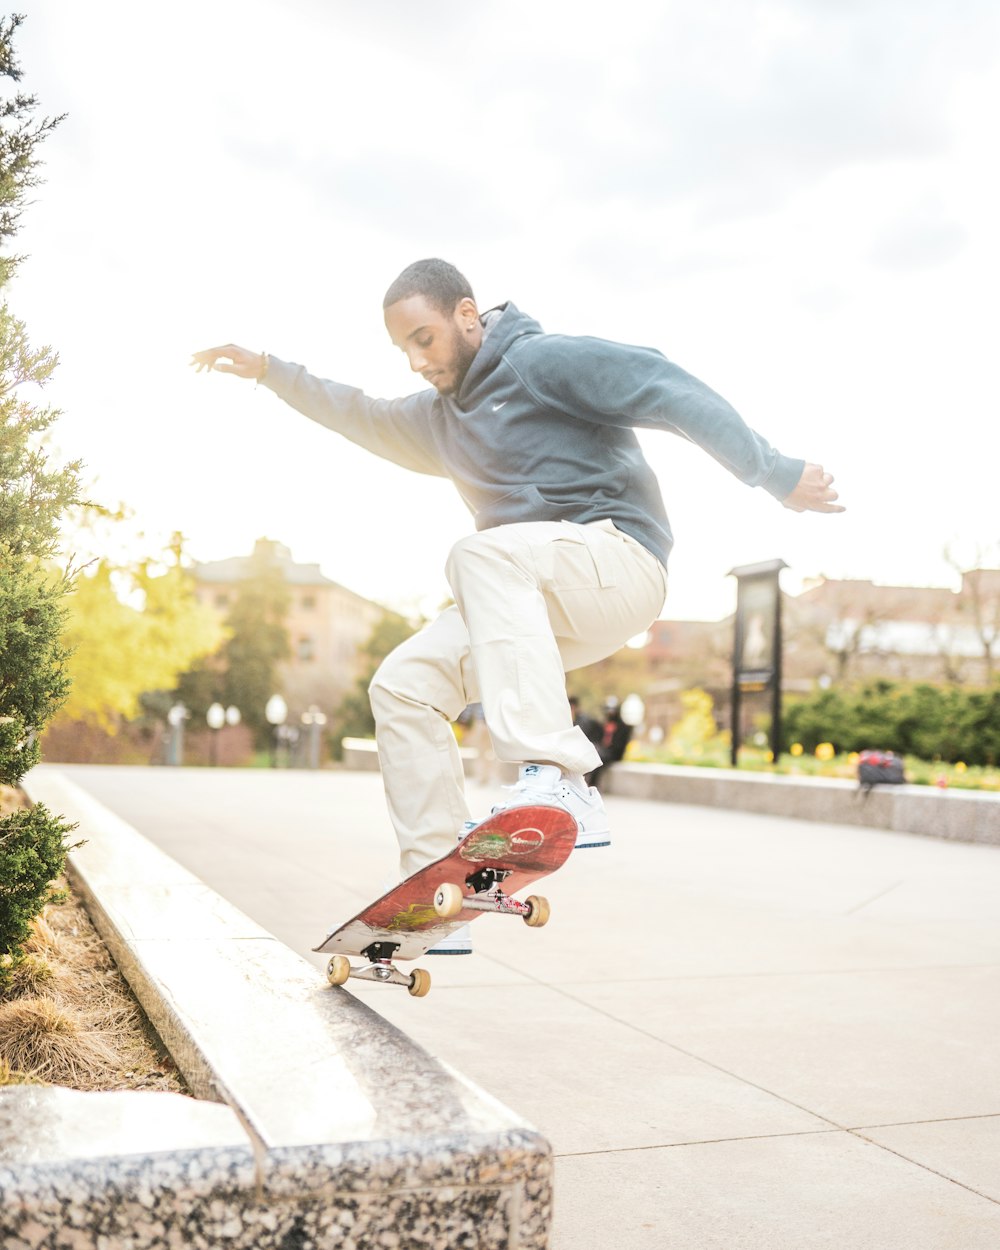 Mann in grauem Kapuzenpullover und brauner Hose fährt tagsüber Skateboard